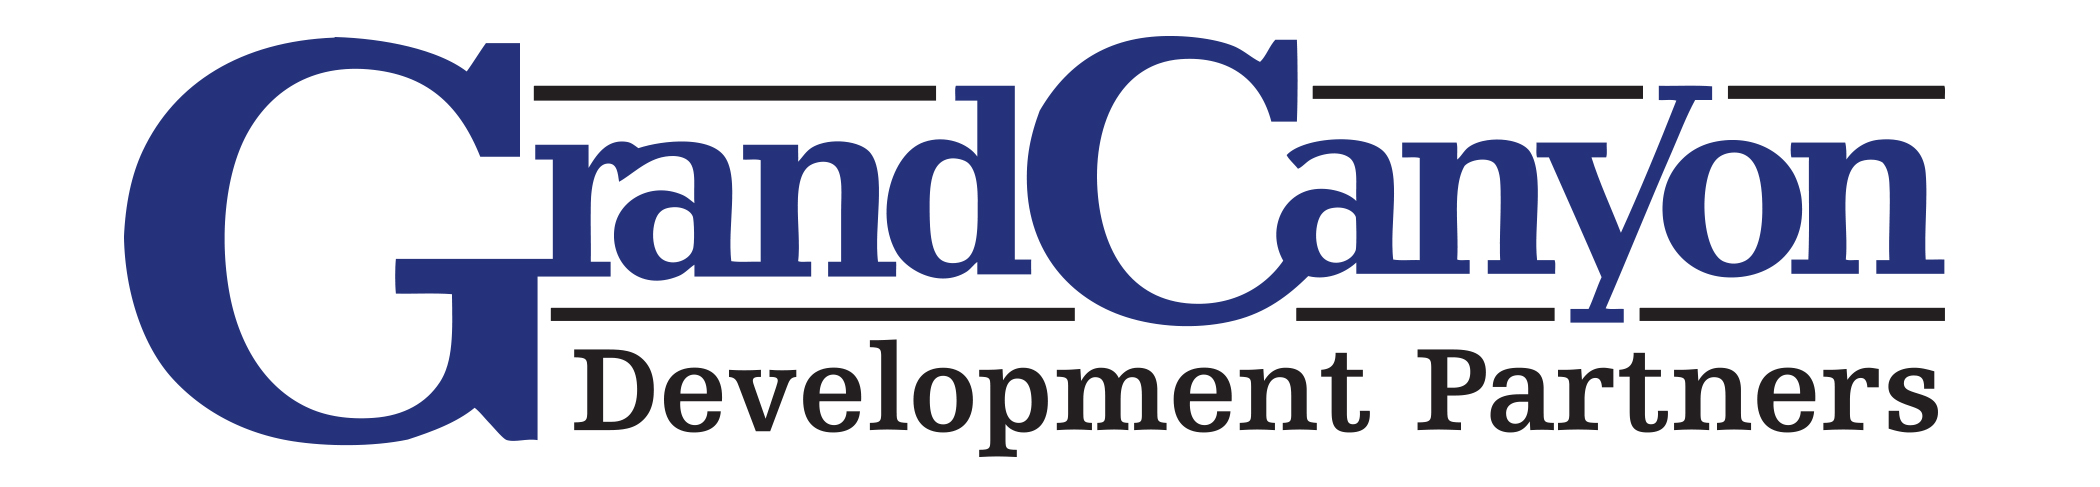 Grand Canyon Development Partners Logo